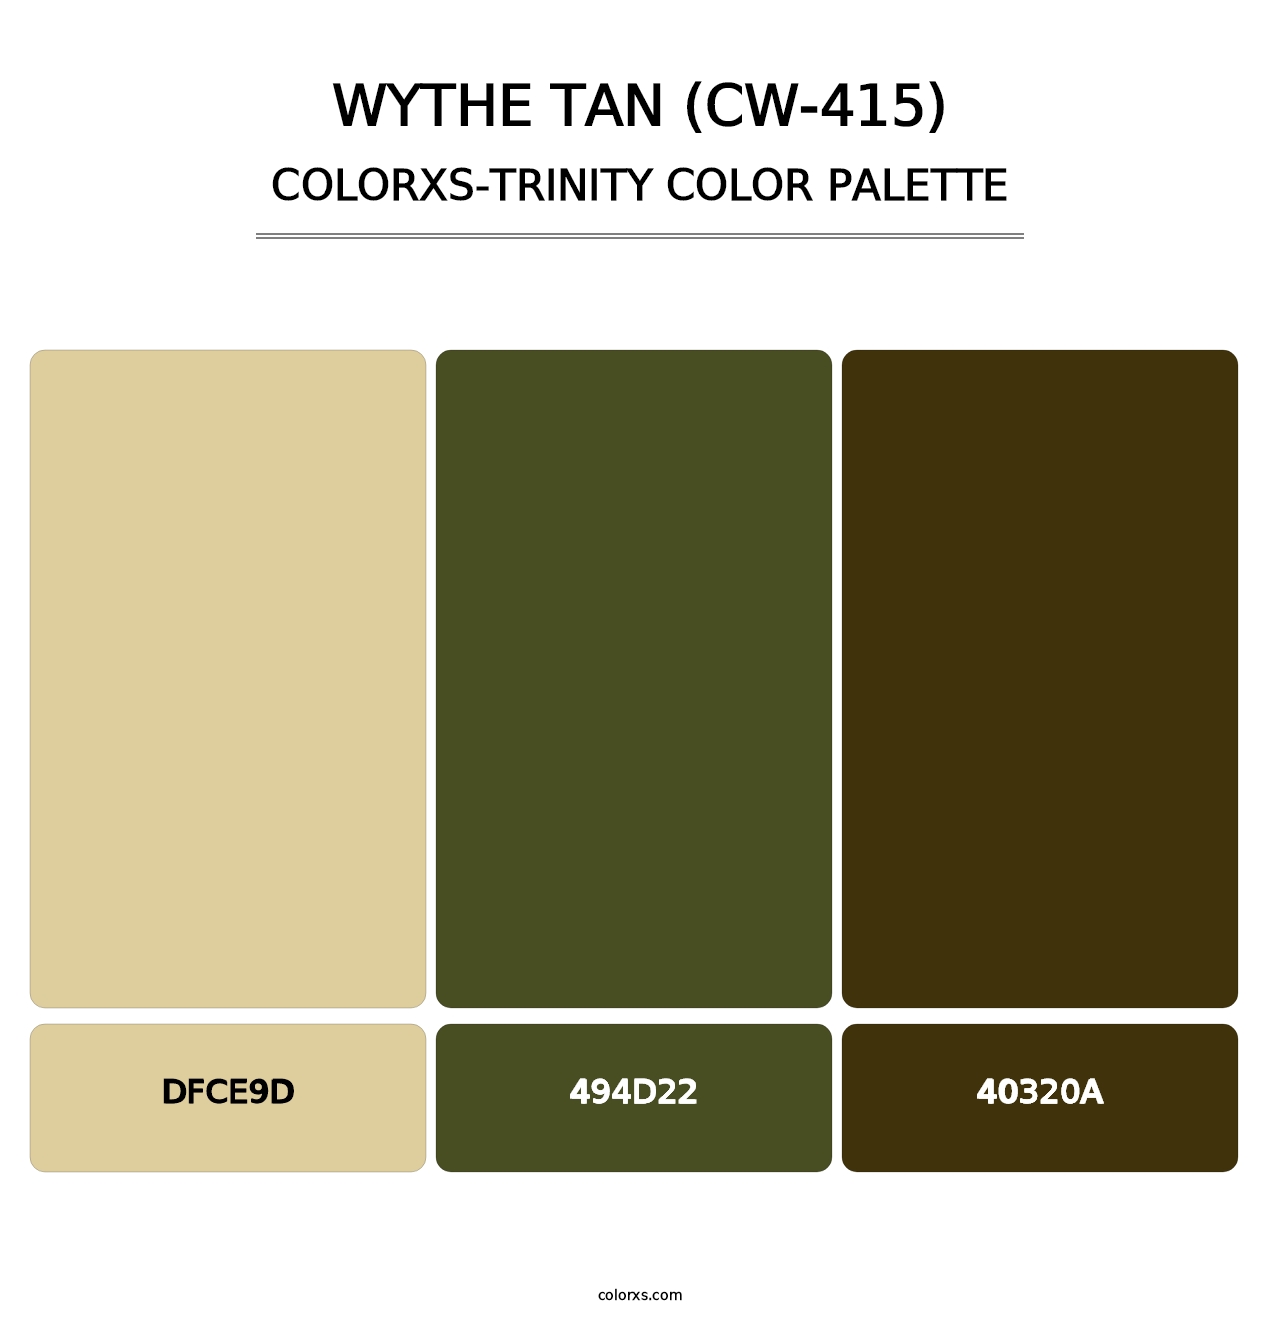 Wythe Tan (CW-415) - Colorxs Trinity Palette